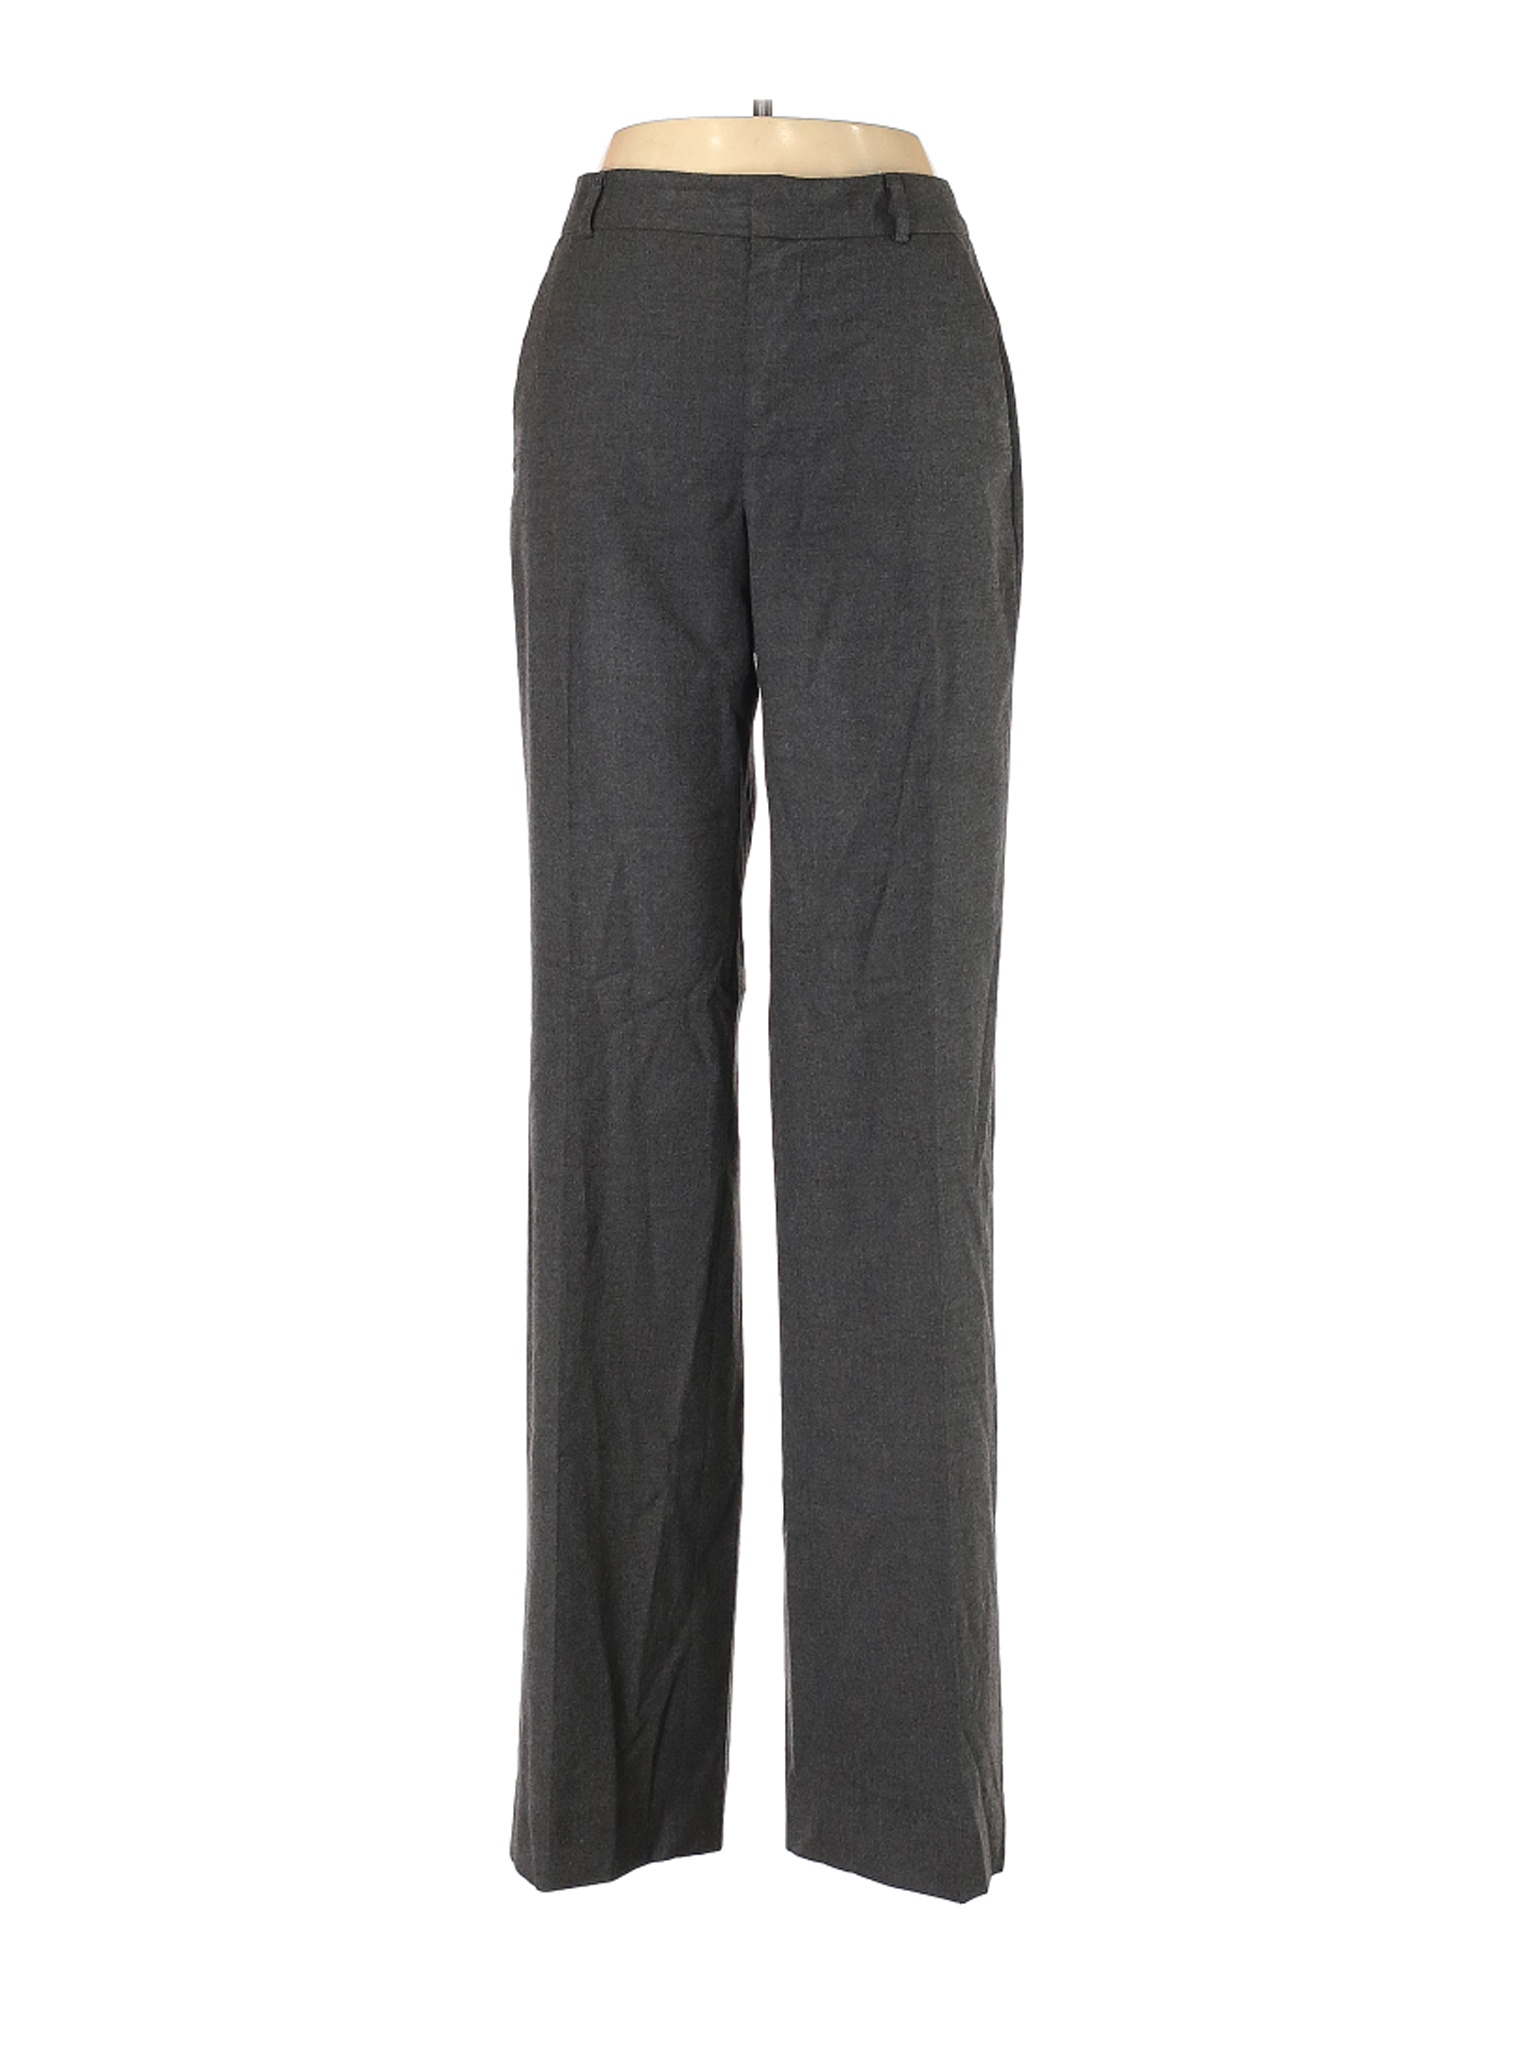 Banana Republic Factory Store Women Gray Dress Pants 4 | eBay